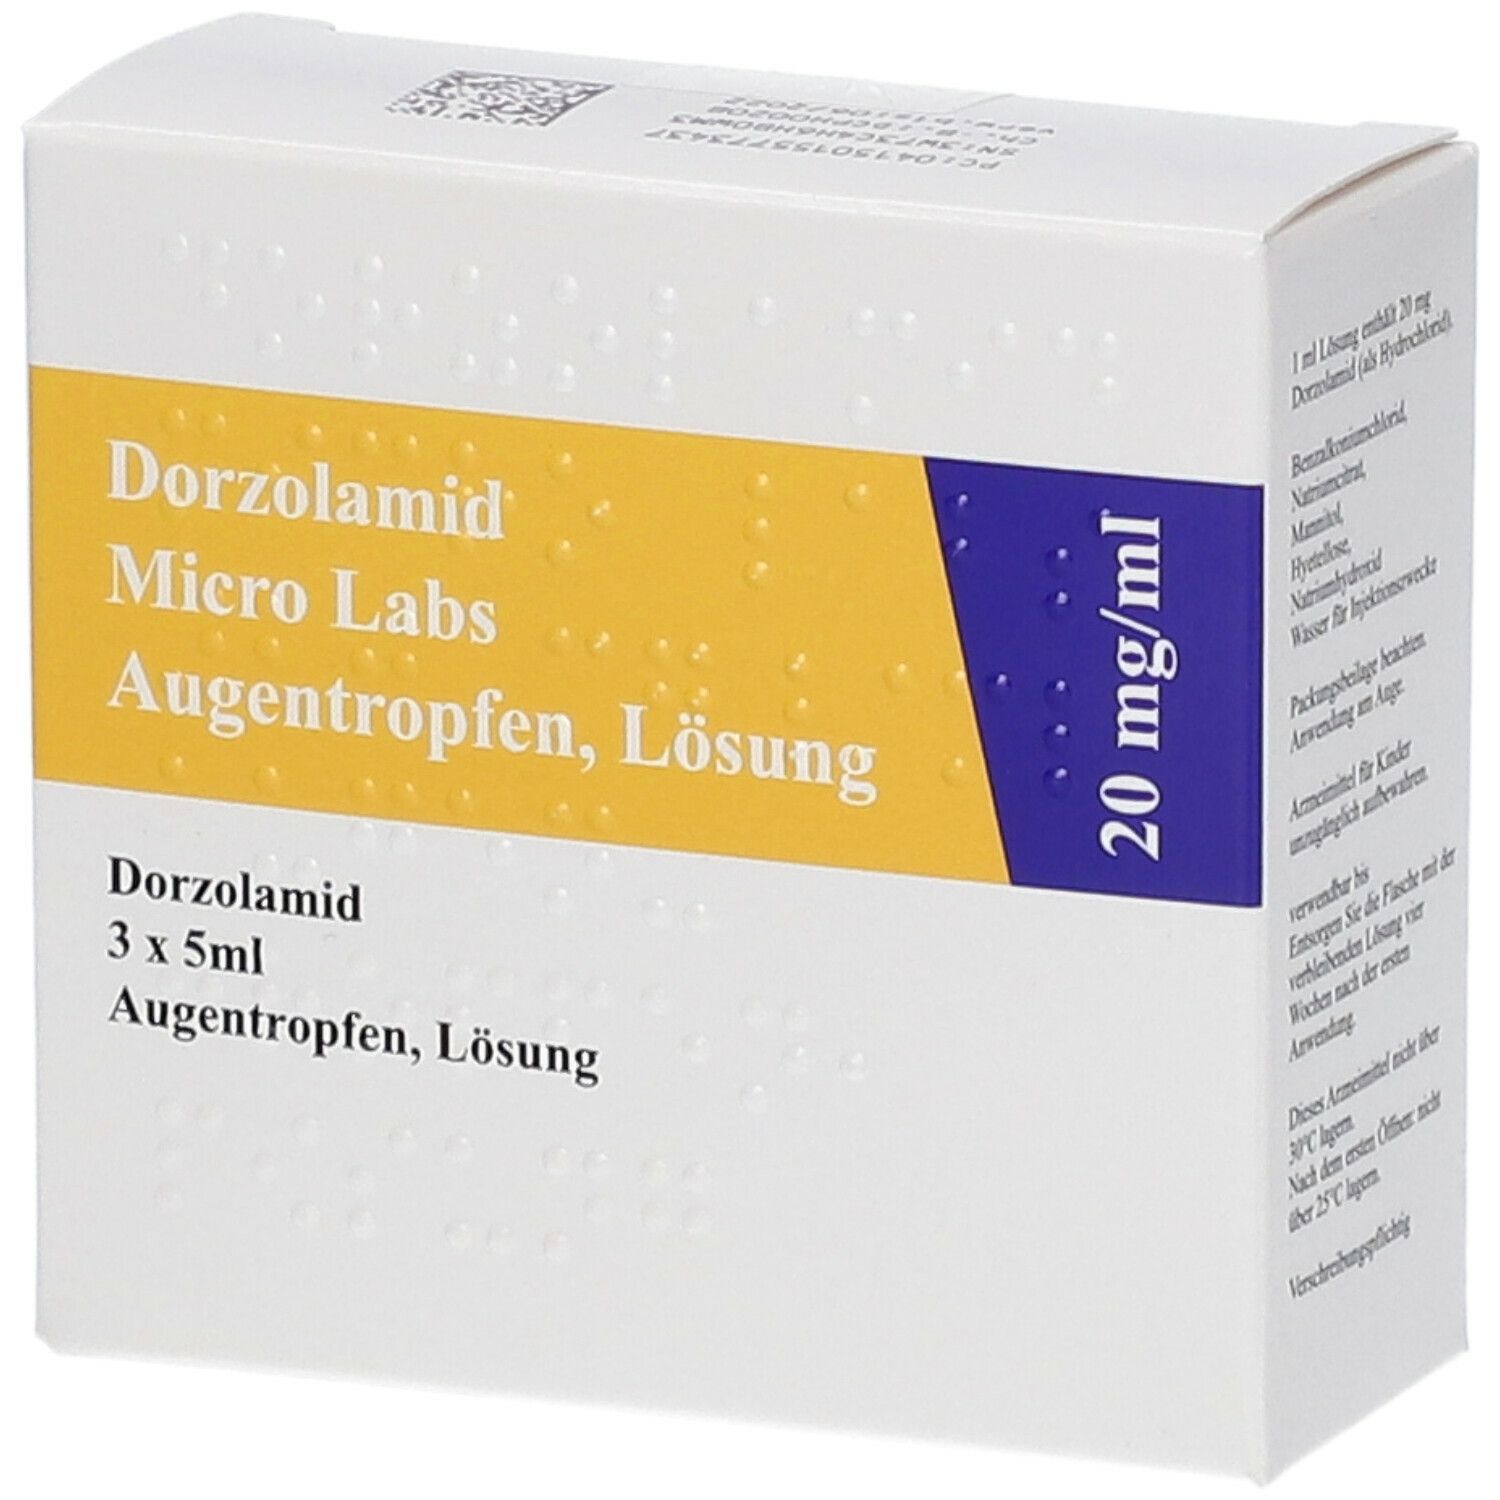 Dorzolamid Micro Labs 20 mg/ml